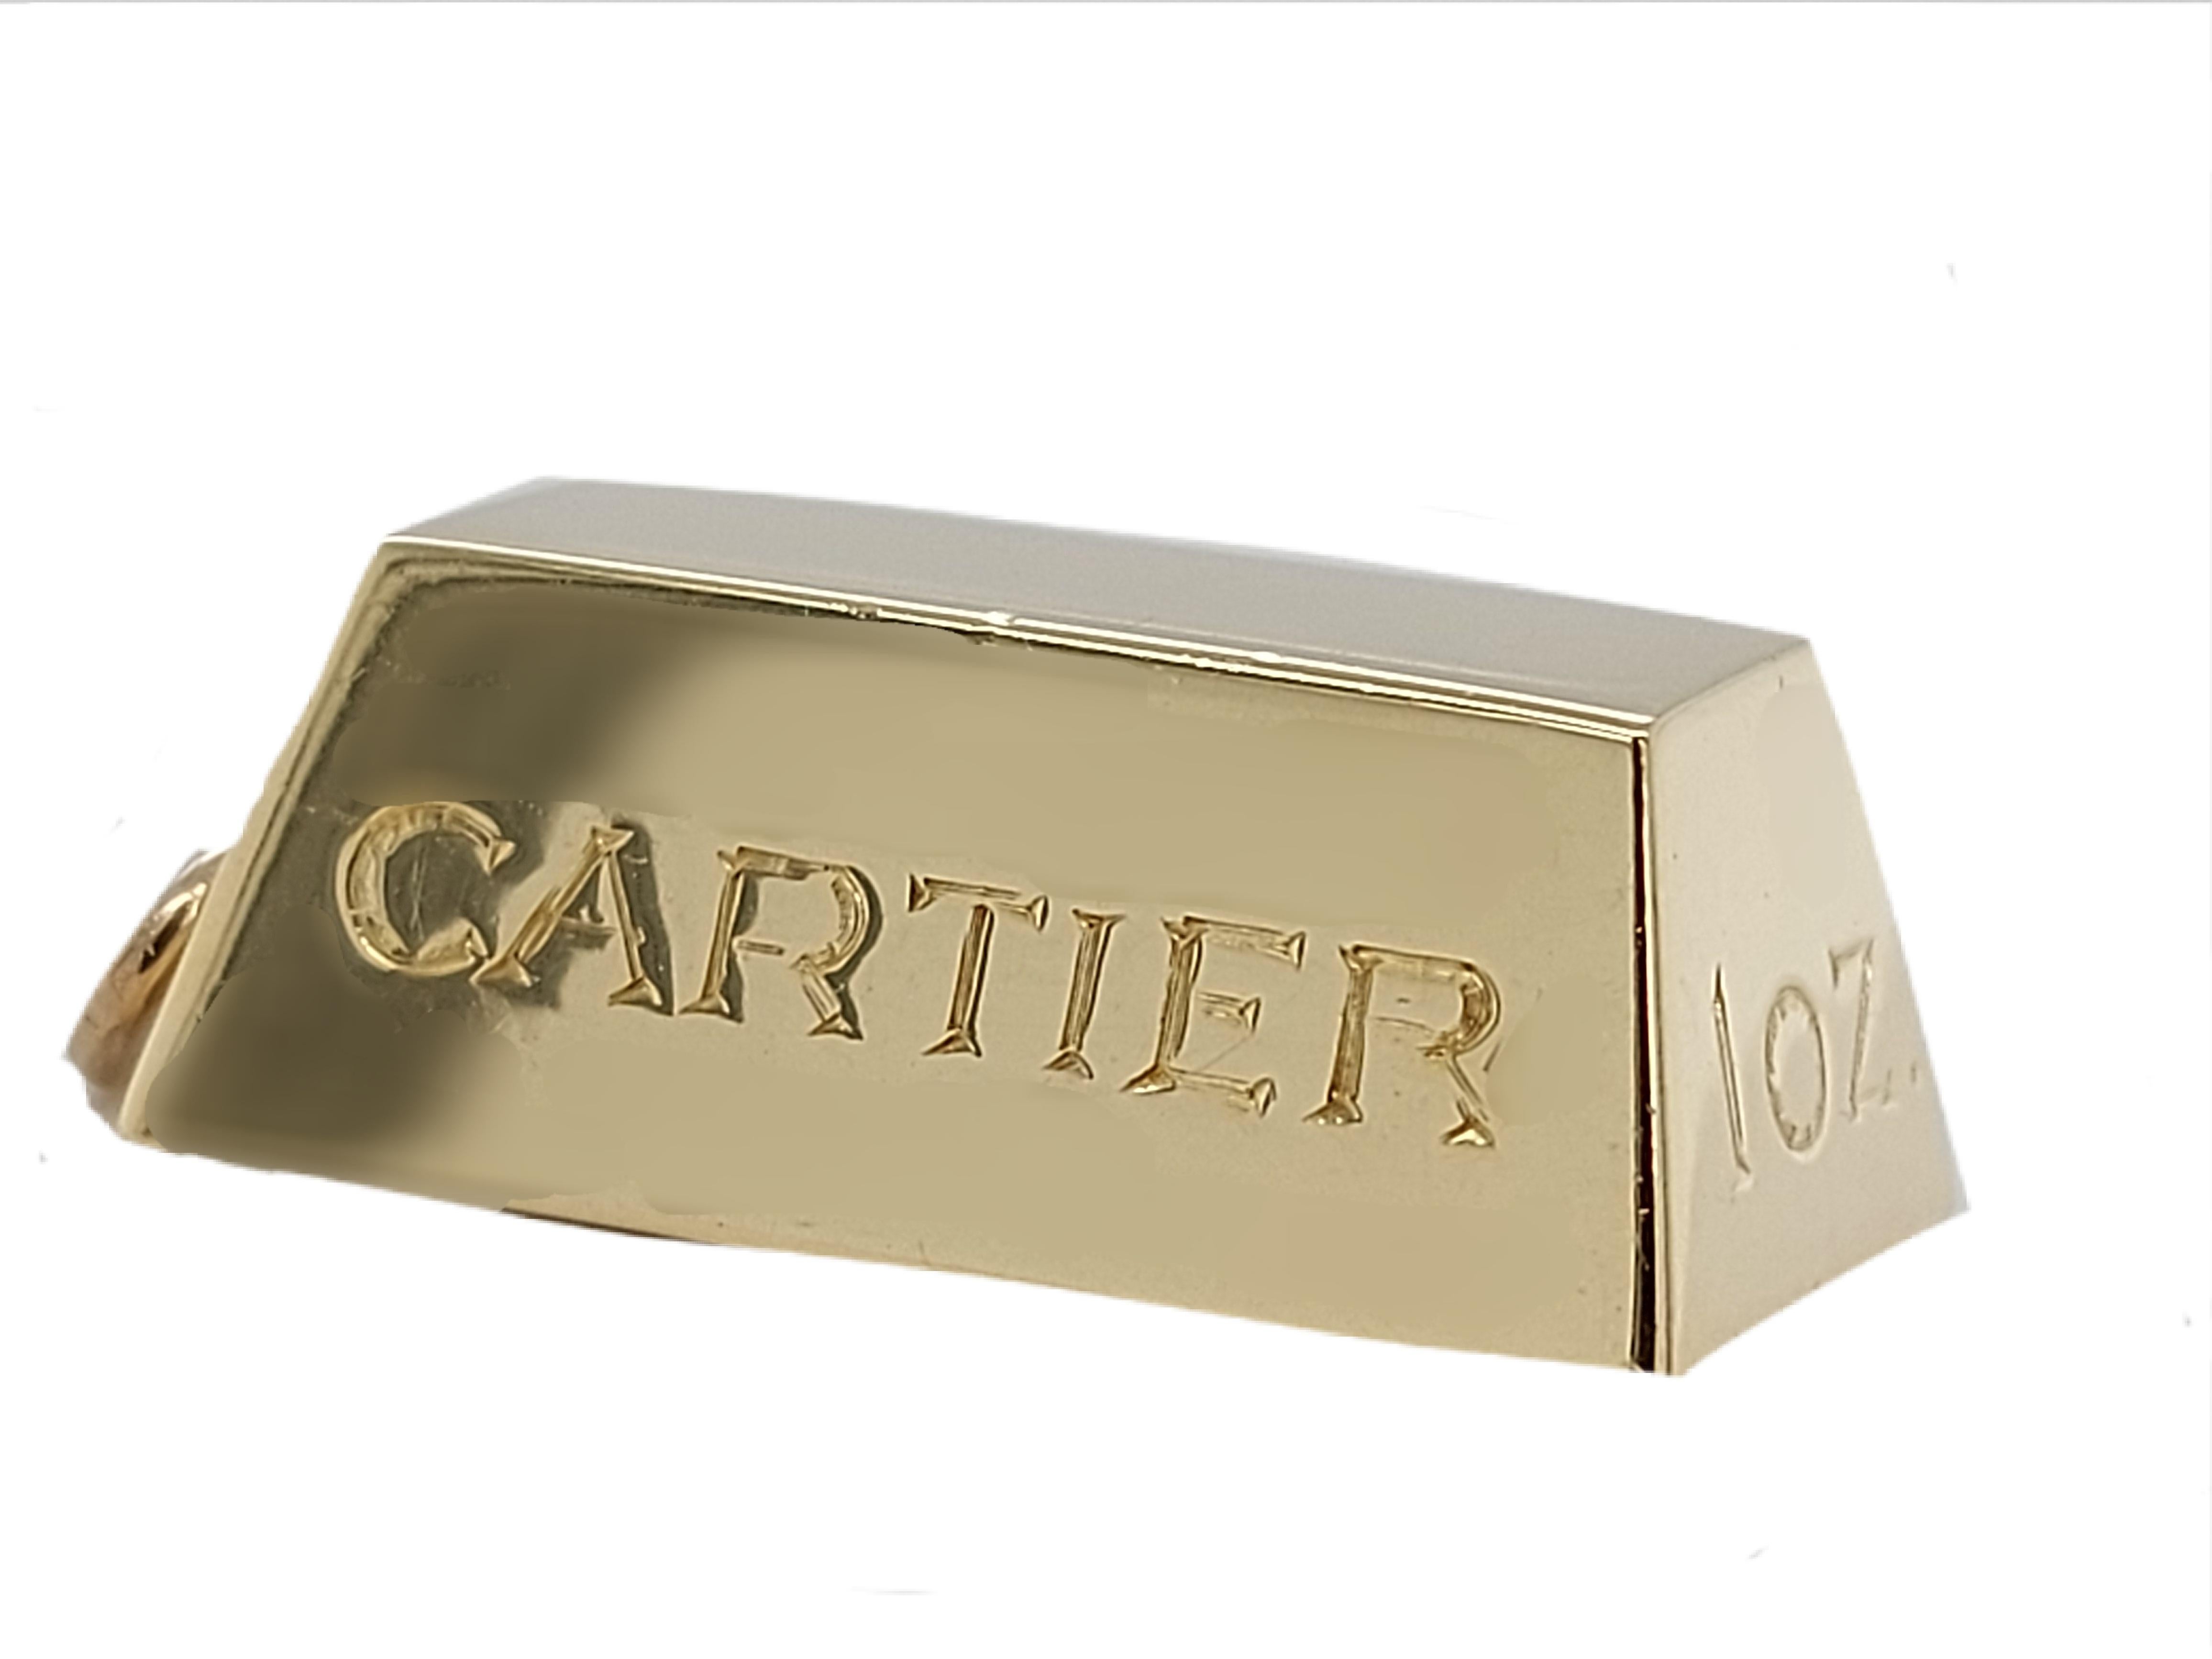 Artisan Cartier 1 oz Ingot Brick Bar Solid 18 Karat Gold Charm or Pendant from 1970s